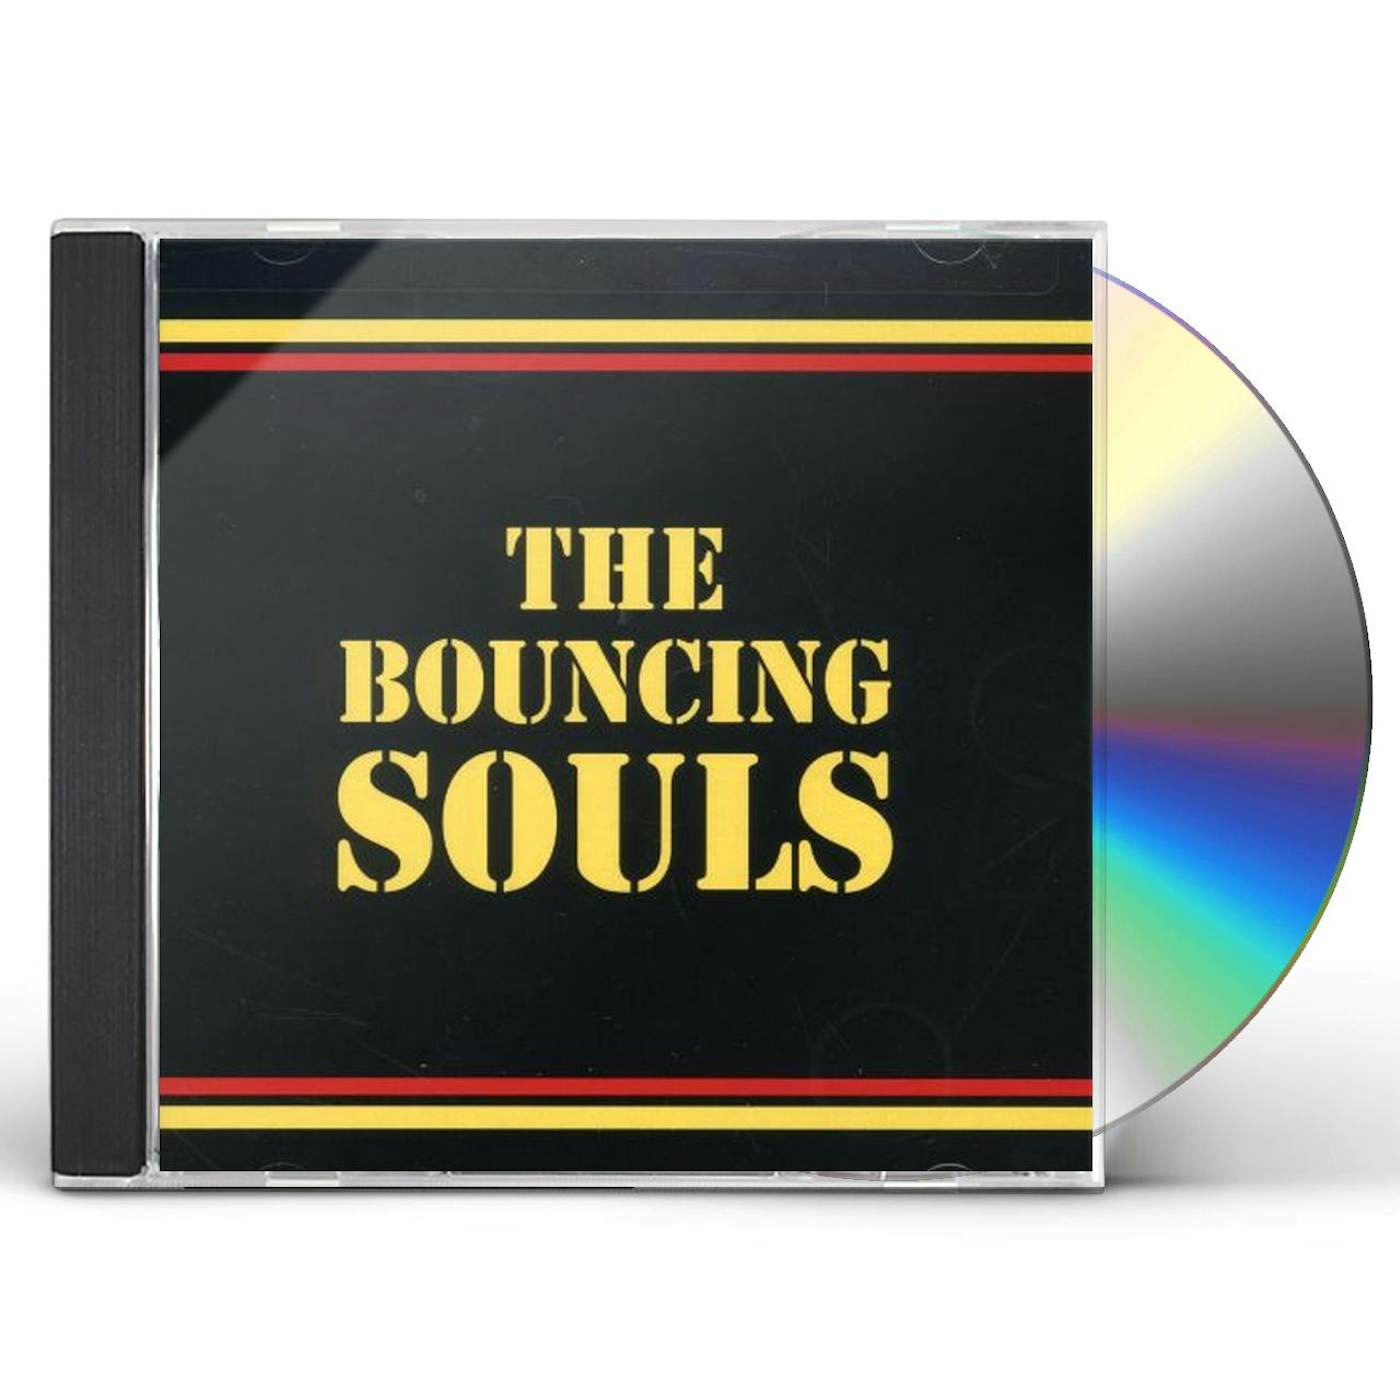 The Bouncing Souls CD